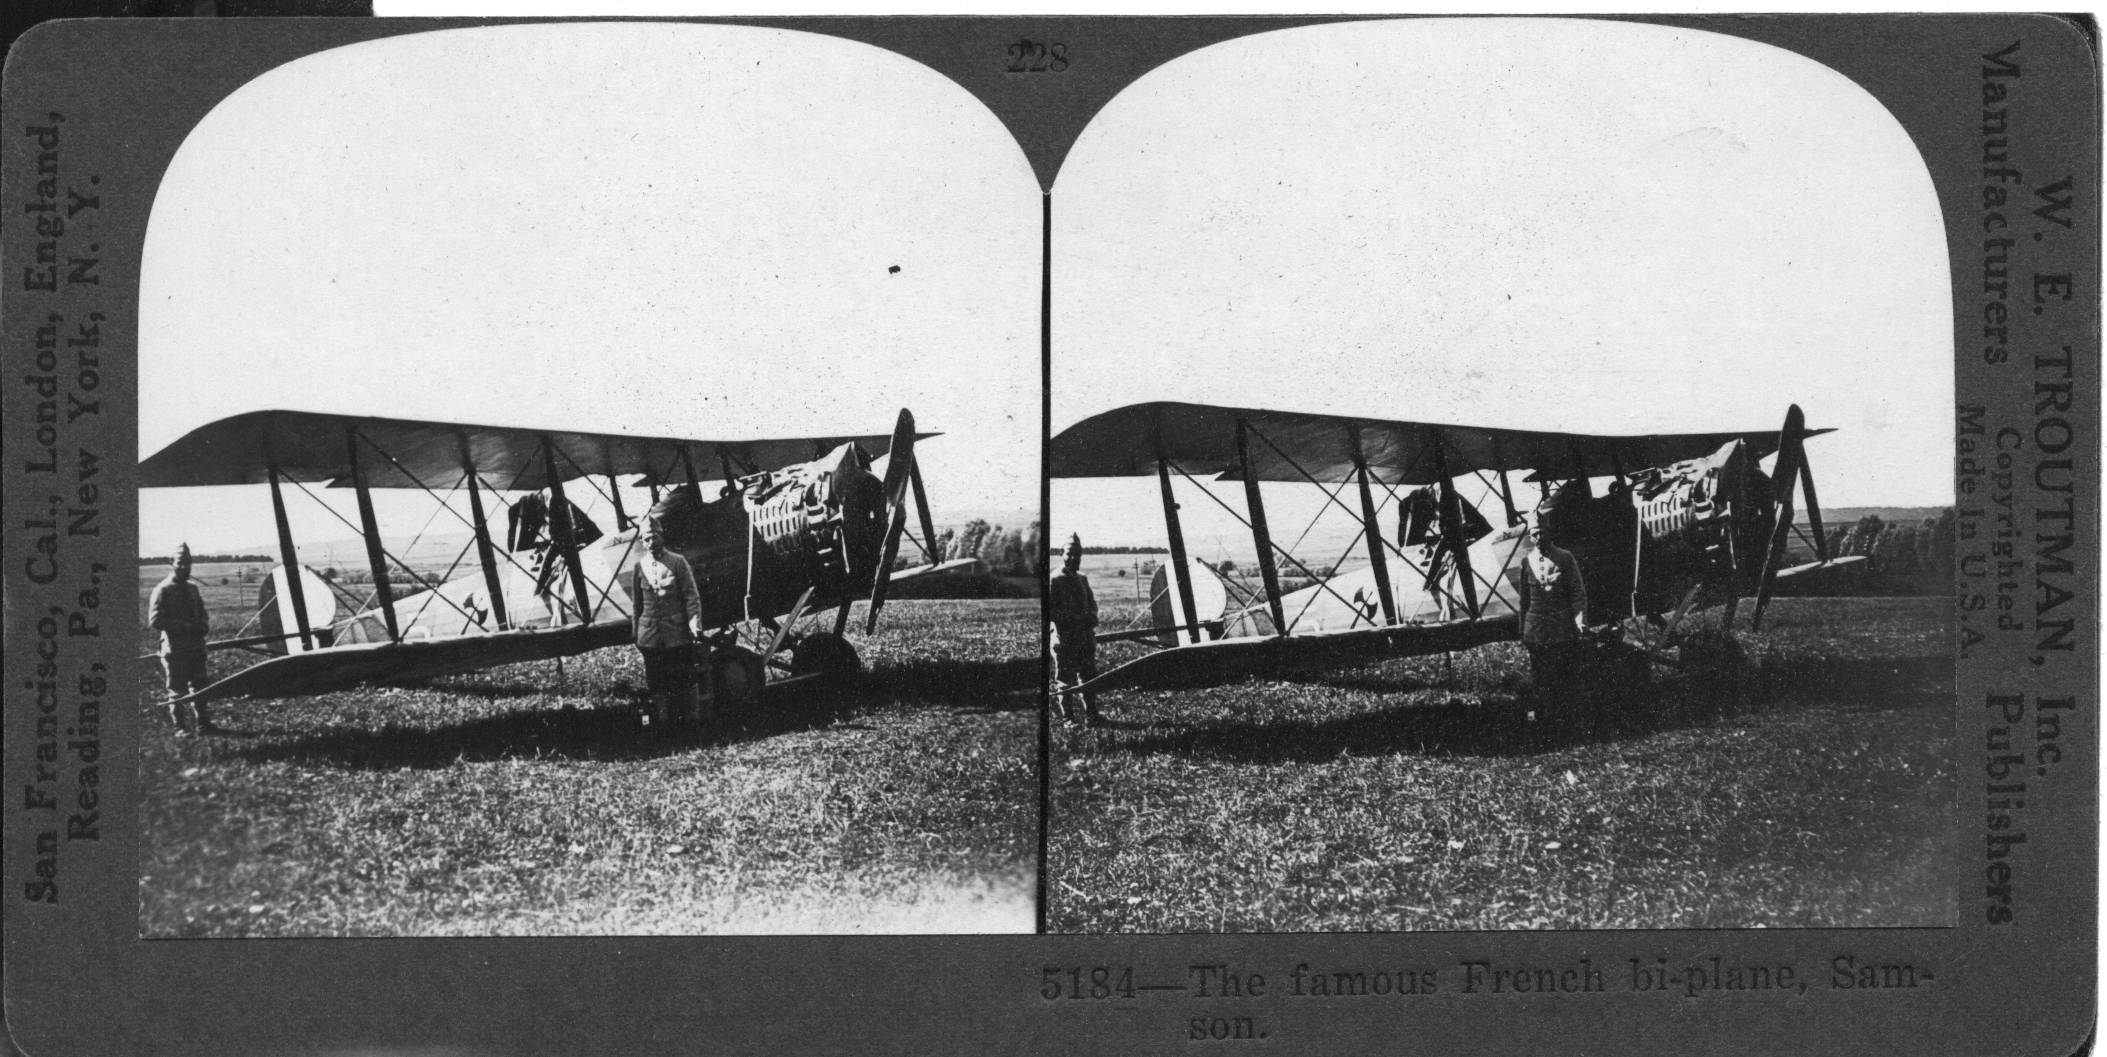 The famous French bi-plane, Samson